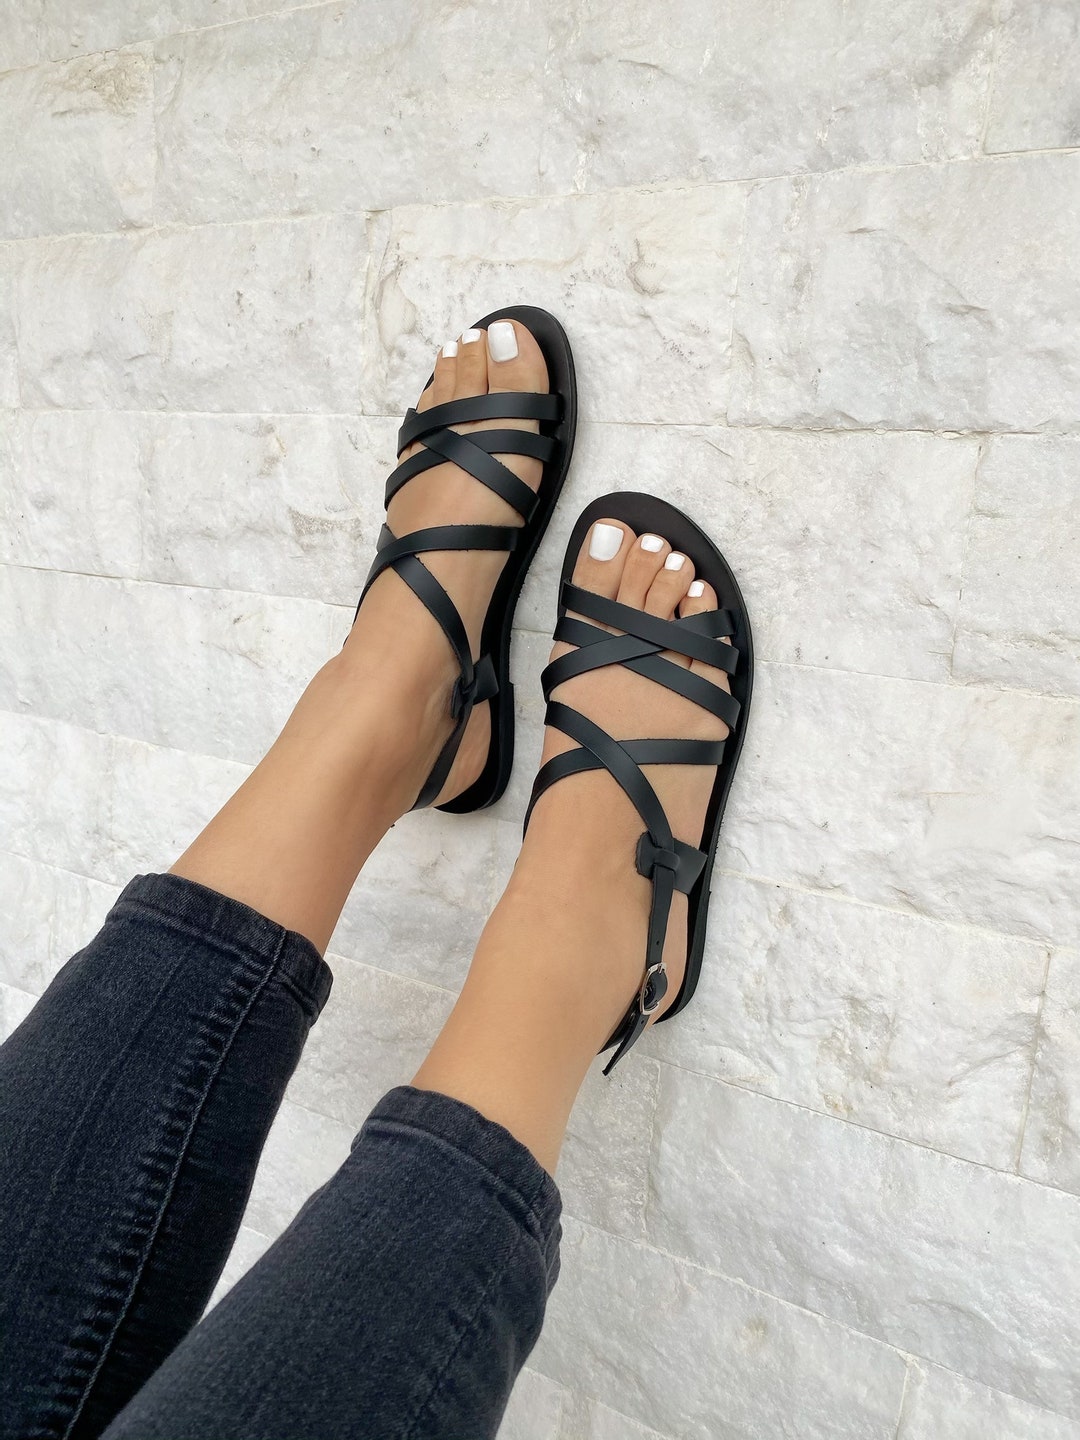 Black Leather Sandals Women, Summer Sandals, Strappy Sandals